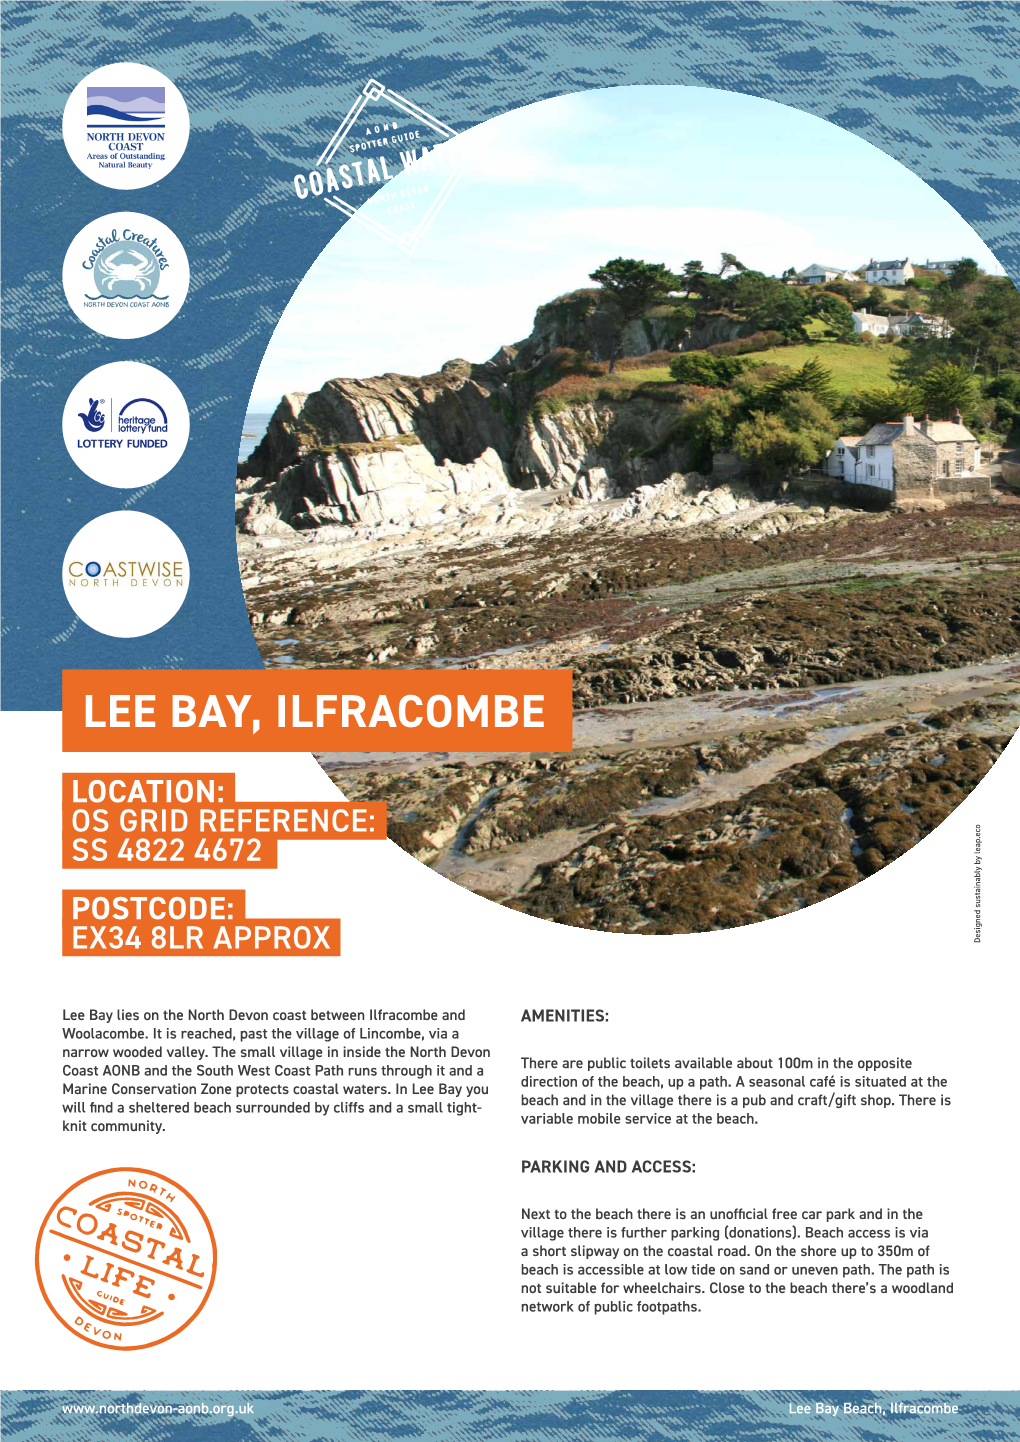 Lee Bay, Ilfracombe